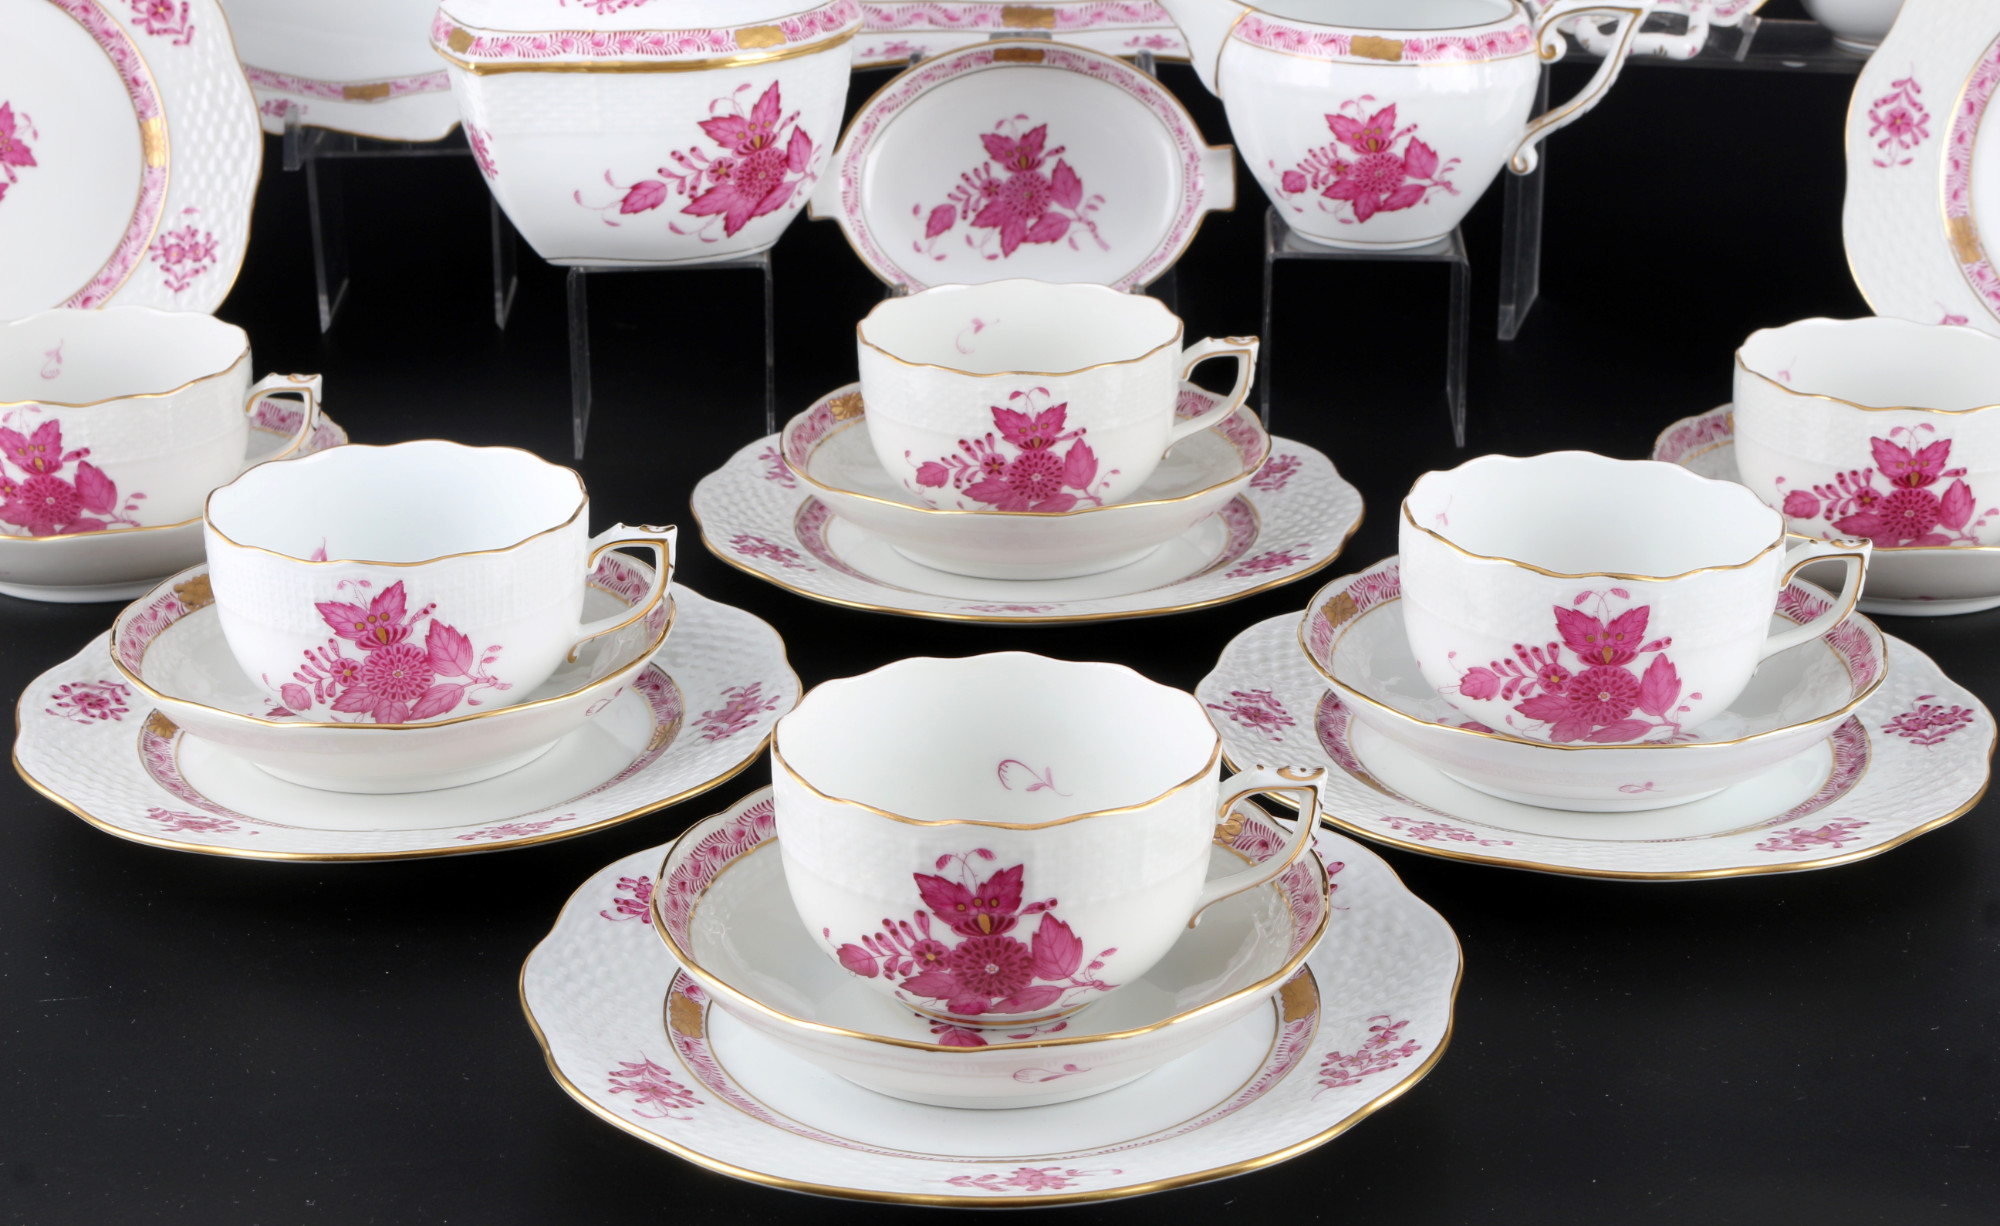 Herend Apponyi Purple tea set for 6 persons, Teeset für 6 Personen, - Image 4 of 5